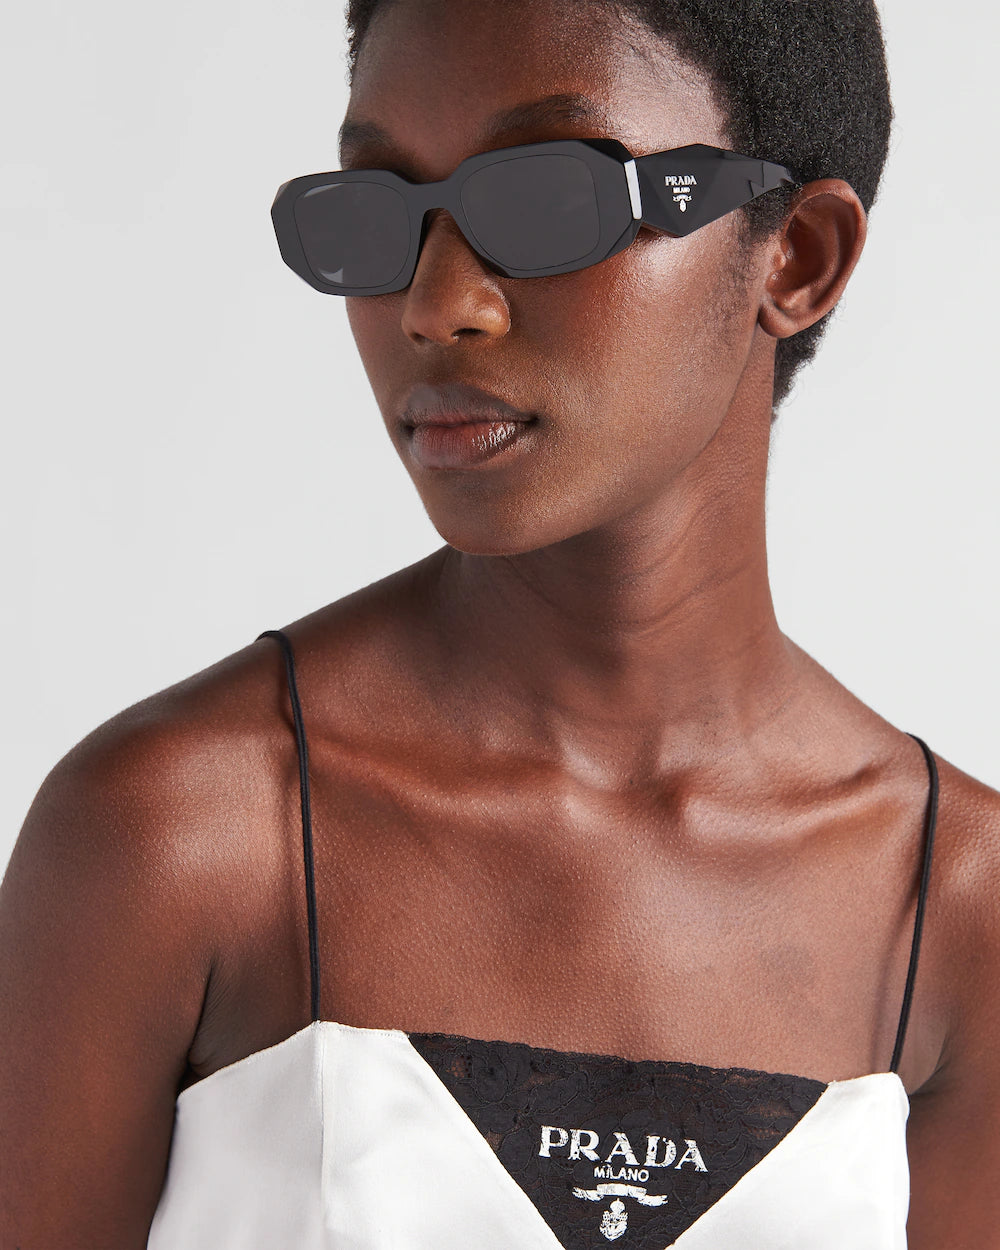 Prada Scultoreo Sunglasses Black 0PR 17WSF